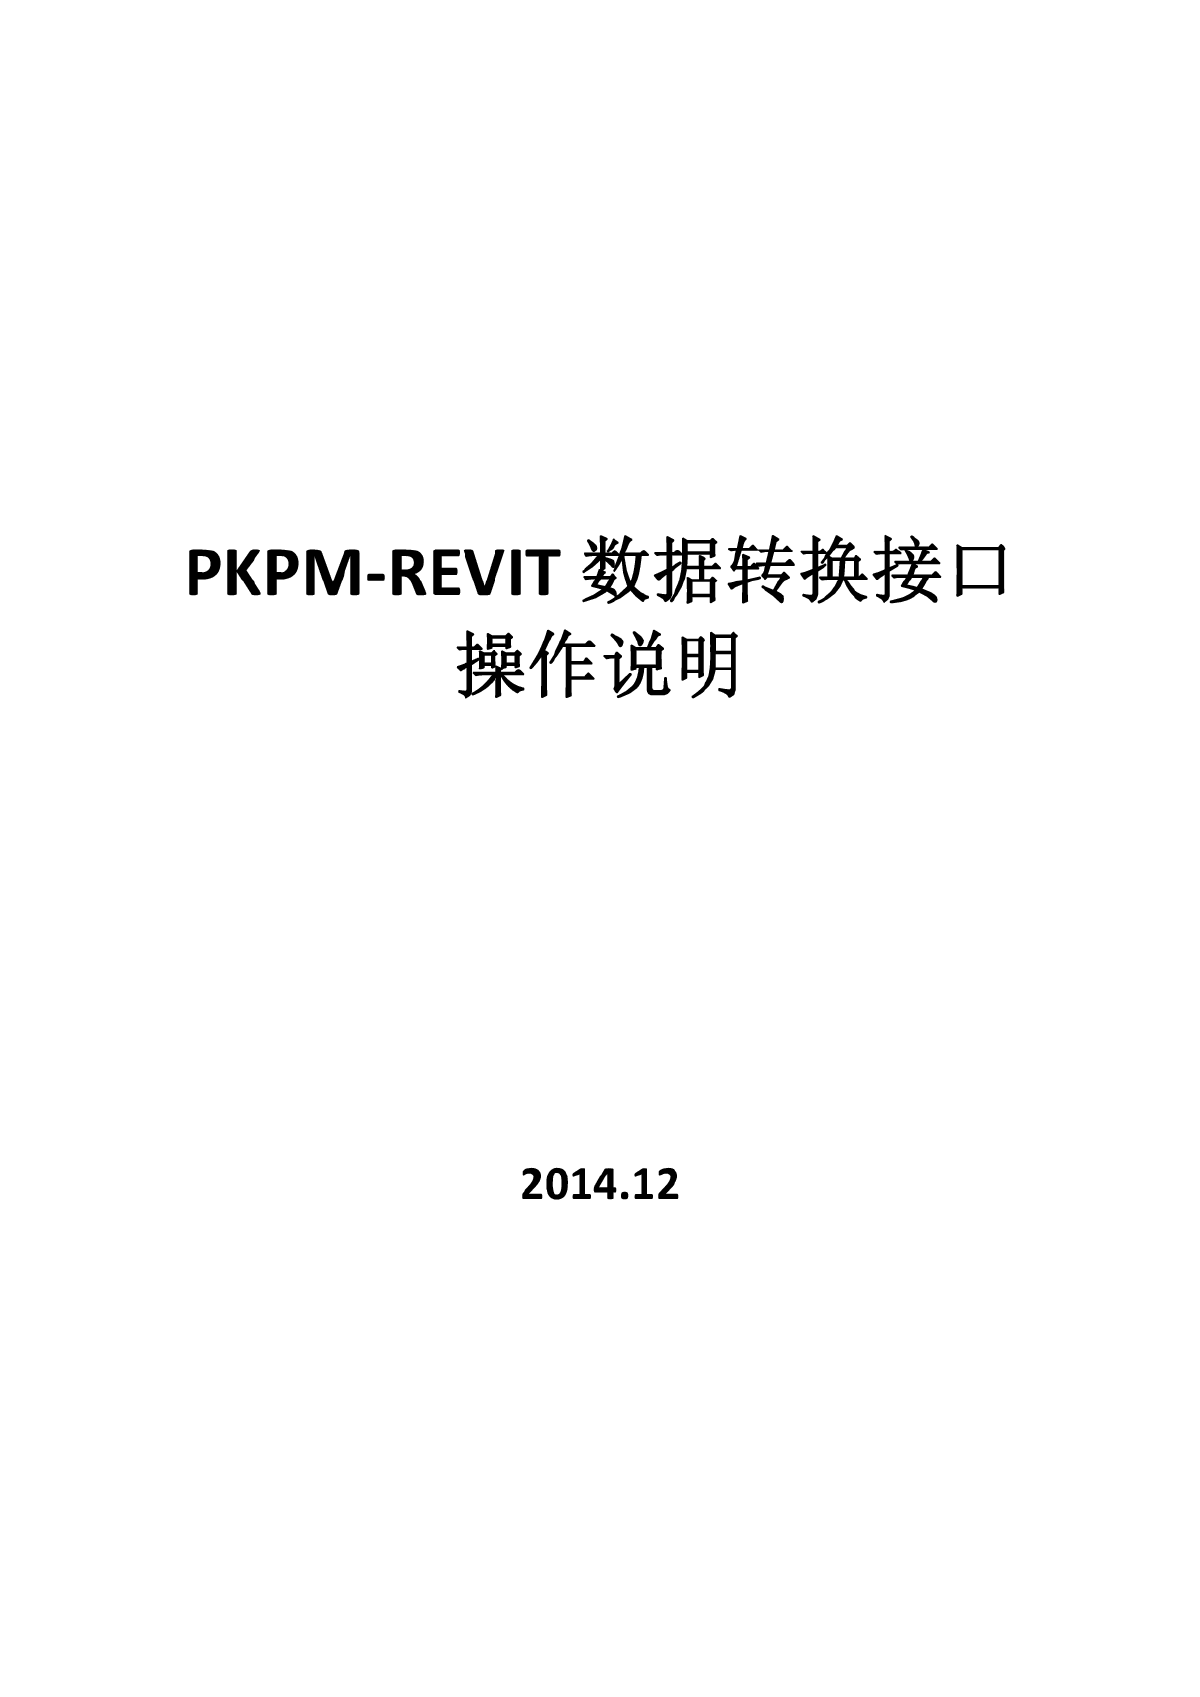 PKPM转Revit软件使用说明书